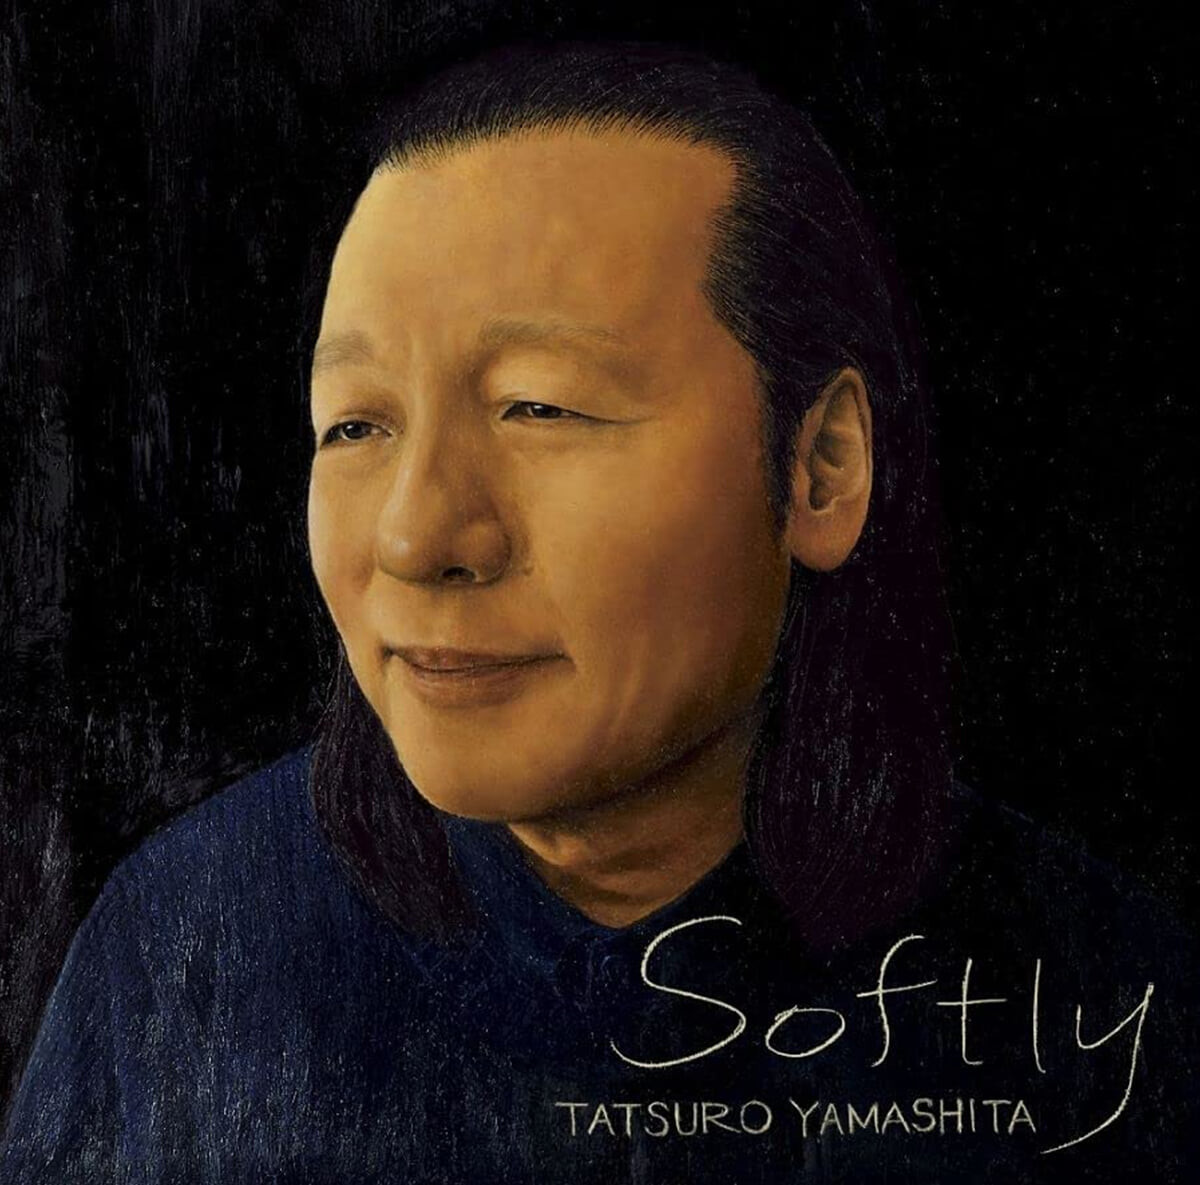 YAMASHITA TATSURO 야마시타 타츠로 - SOFTLY (2LP, 180g, 일본 완전 생산 한정반)